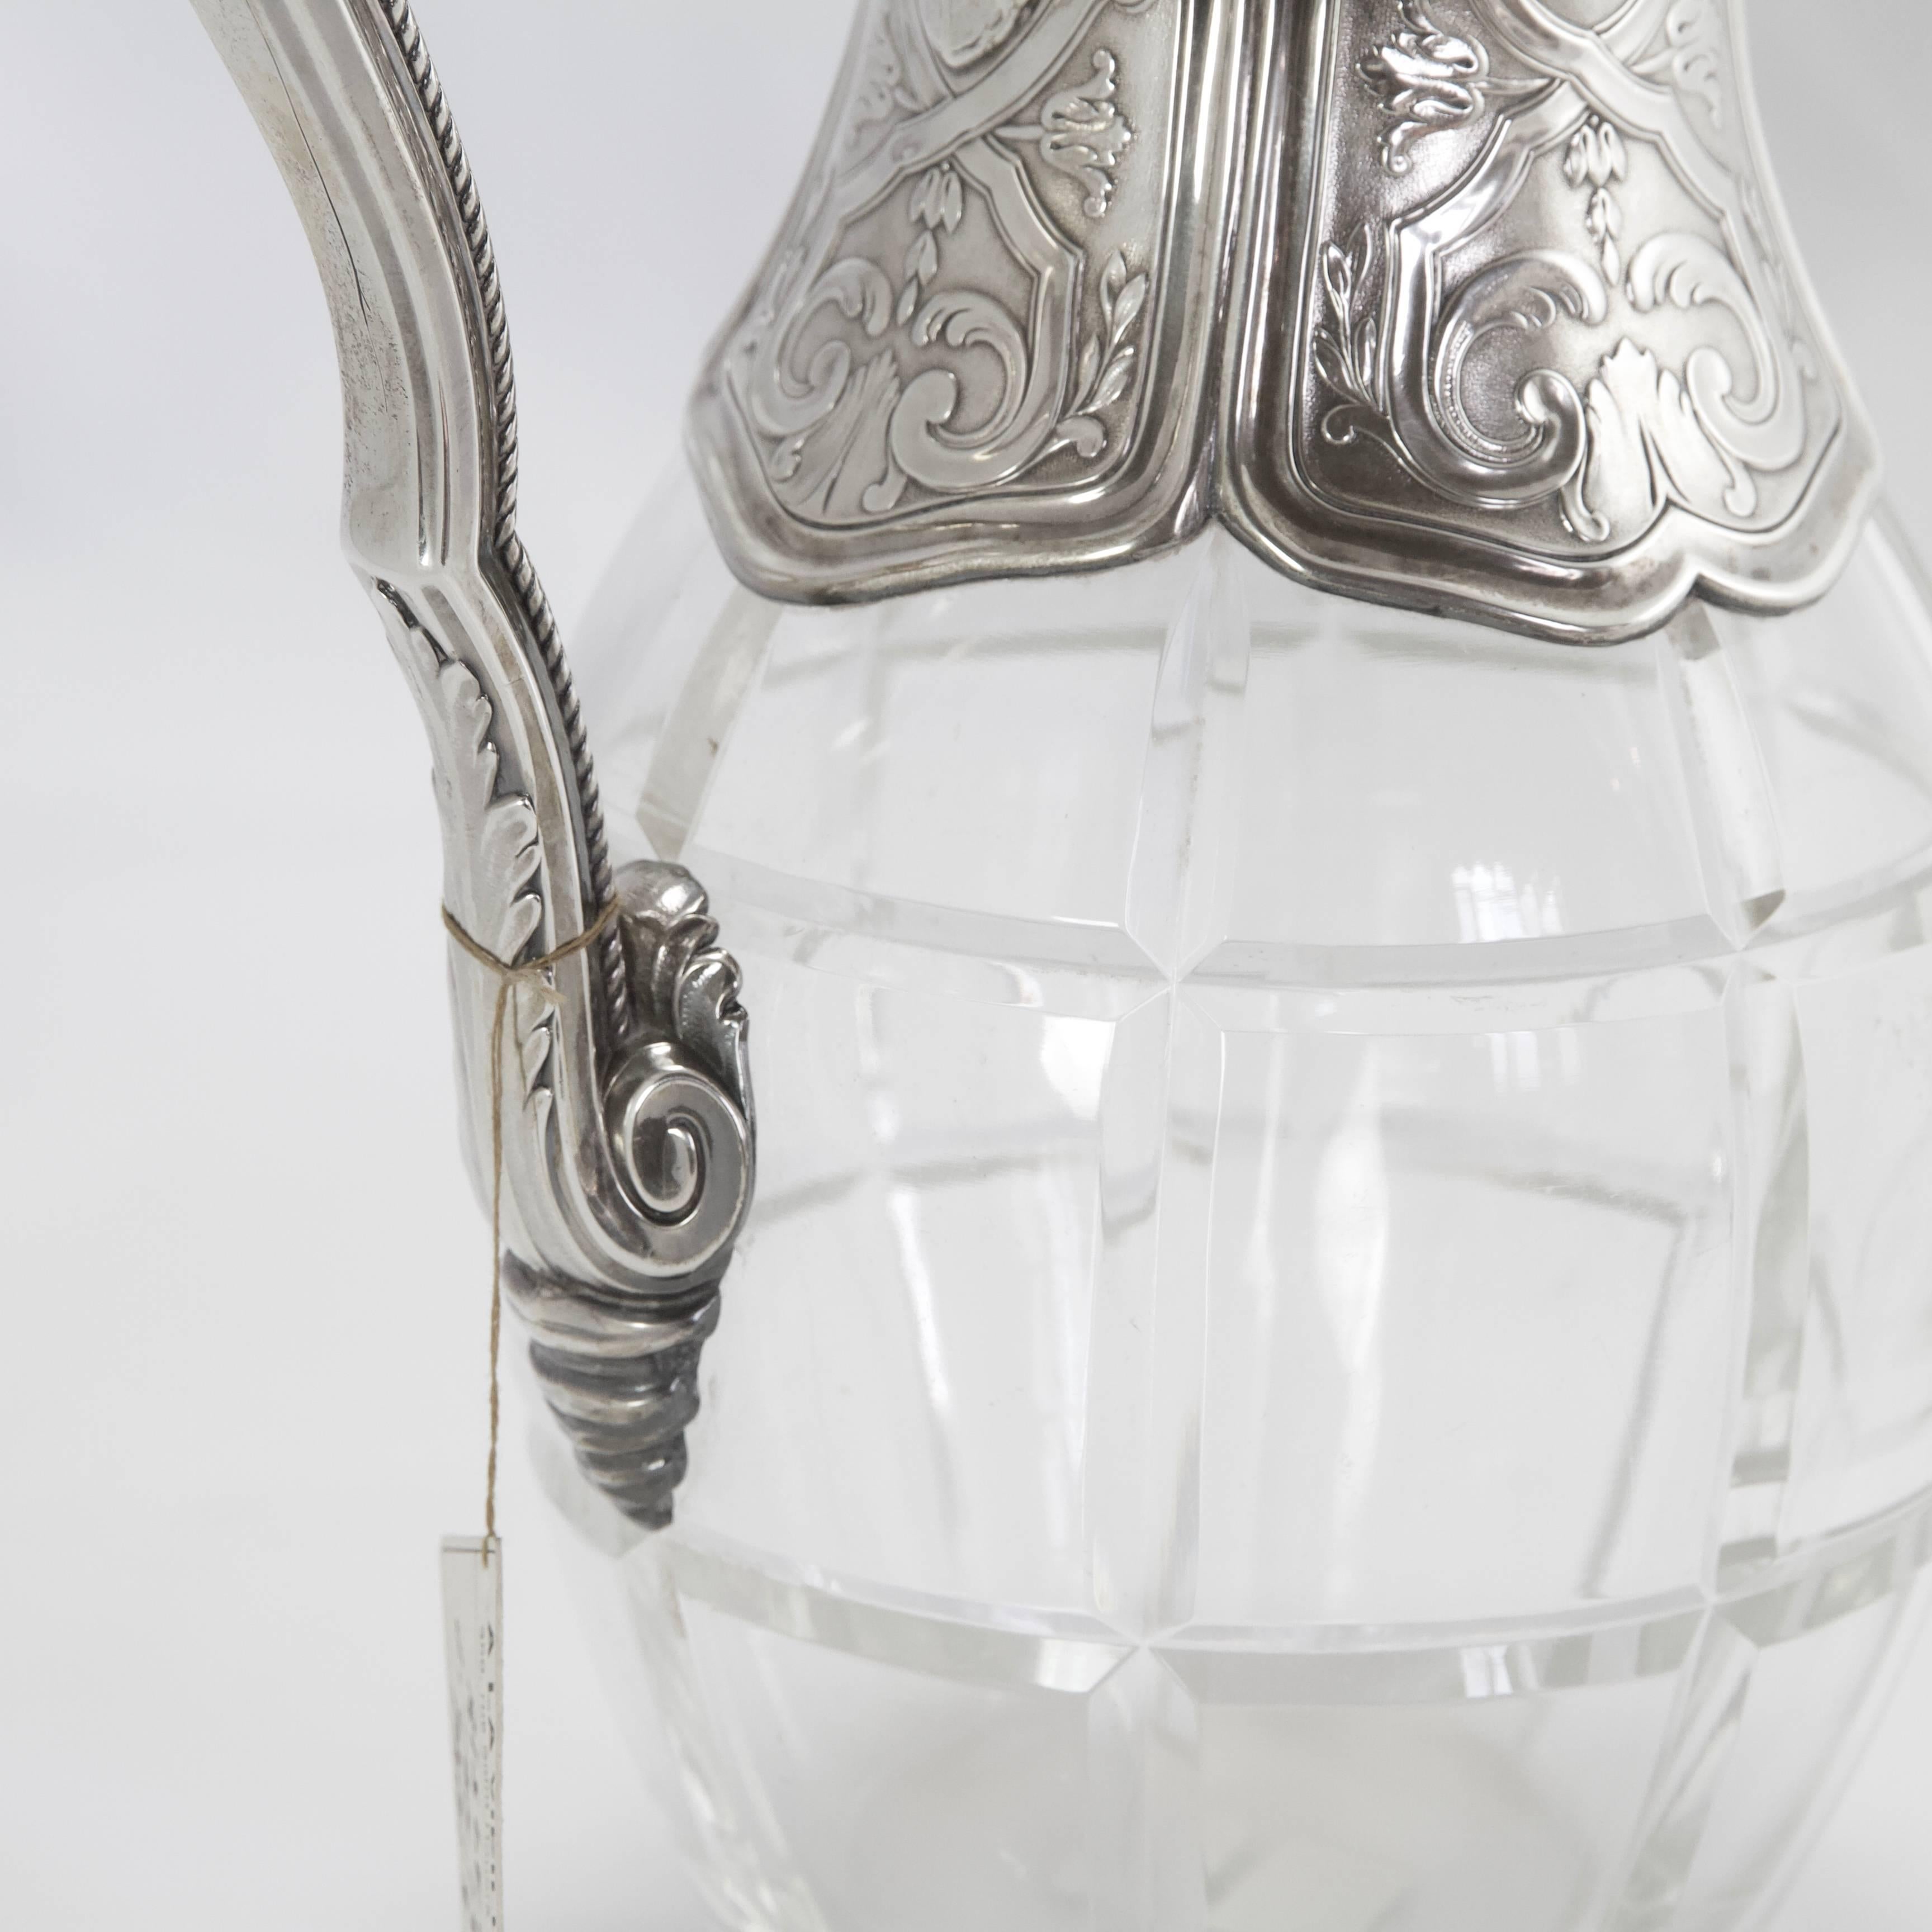 Regency Belle Époque Crystal and Sterling Silver Carafe by Risler For Sale